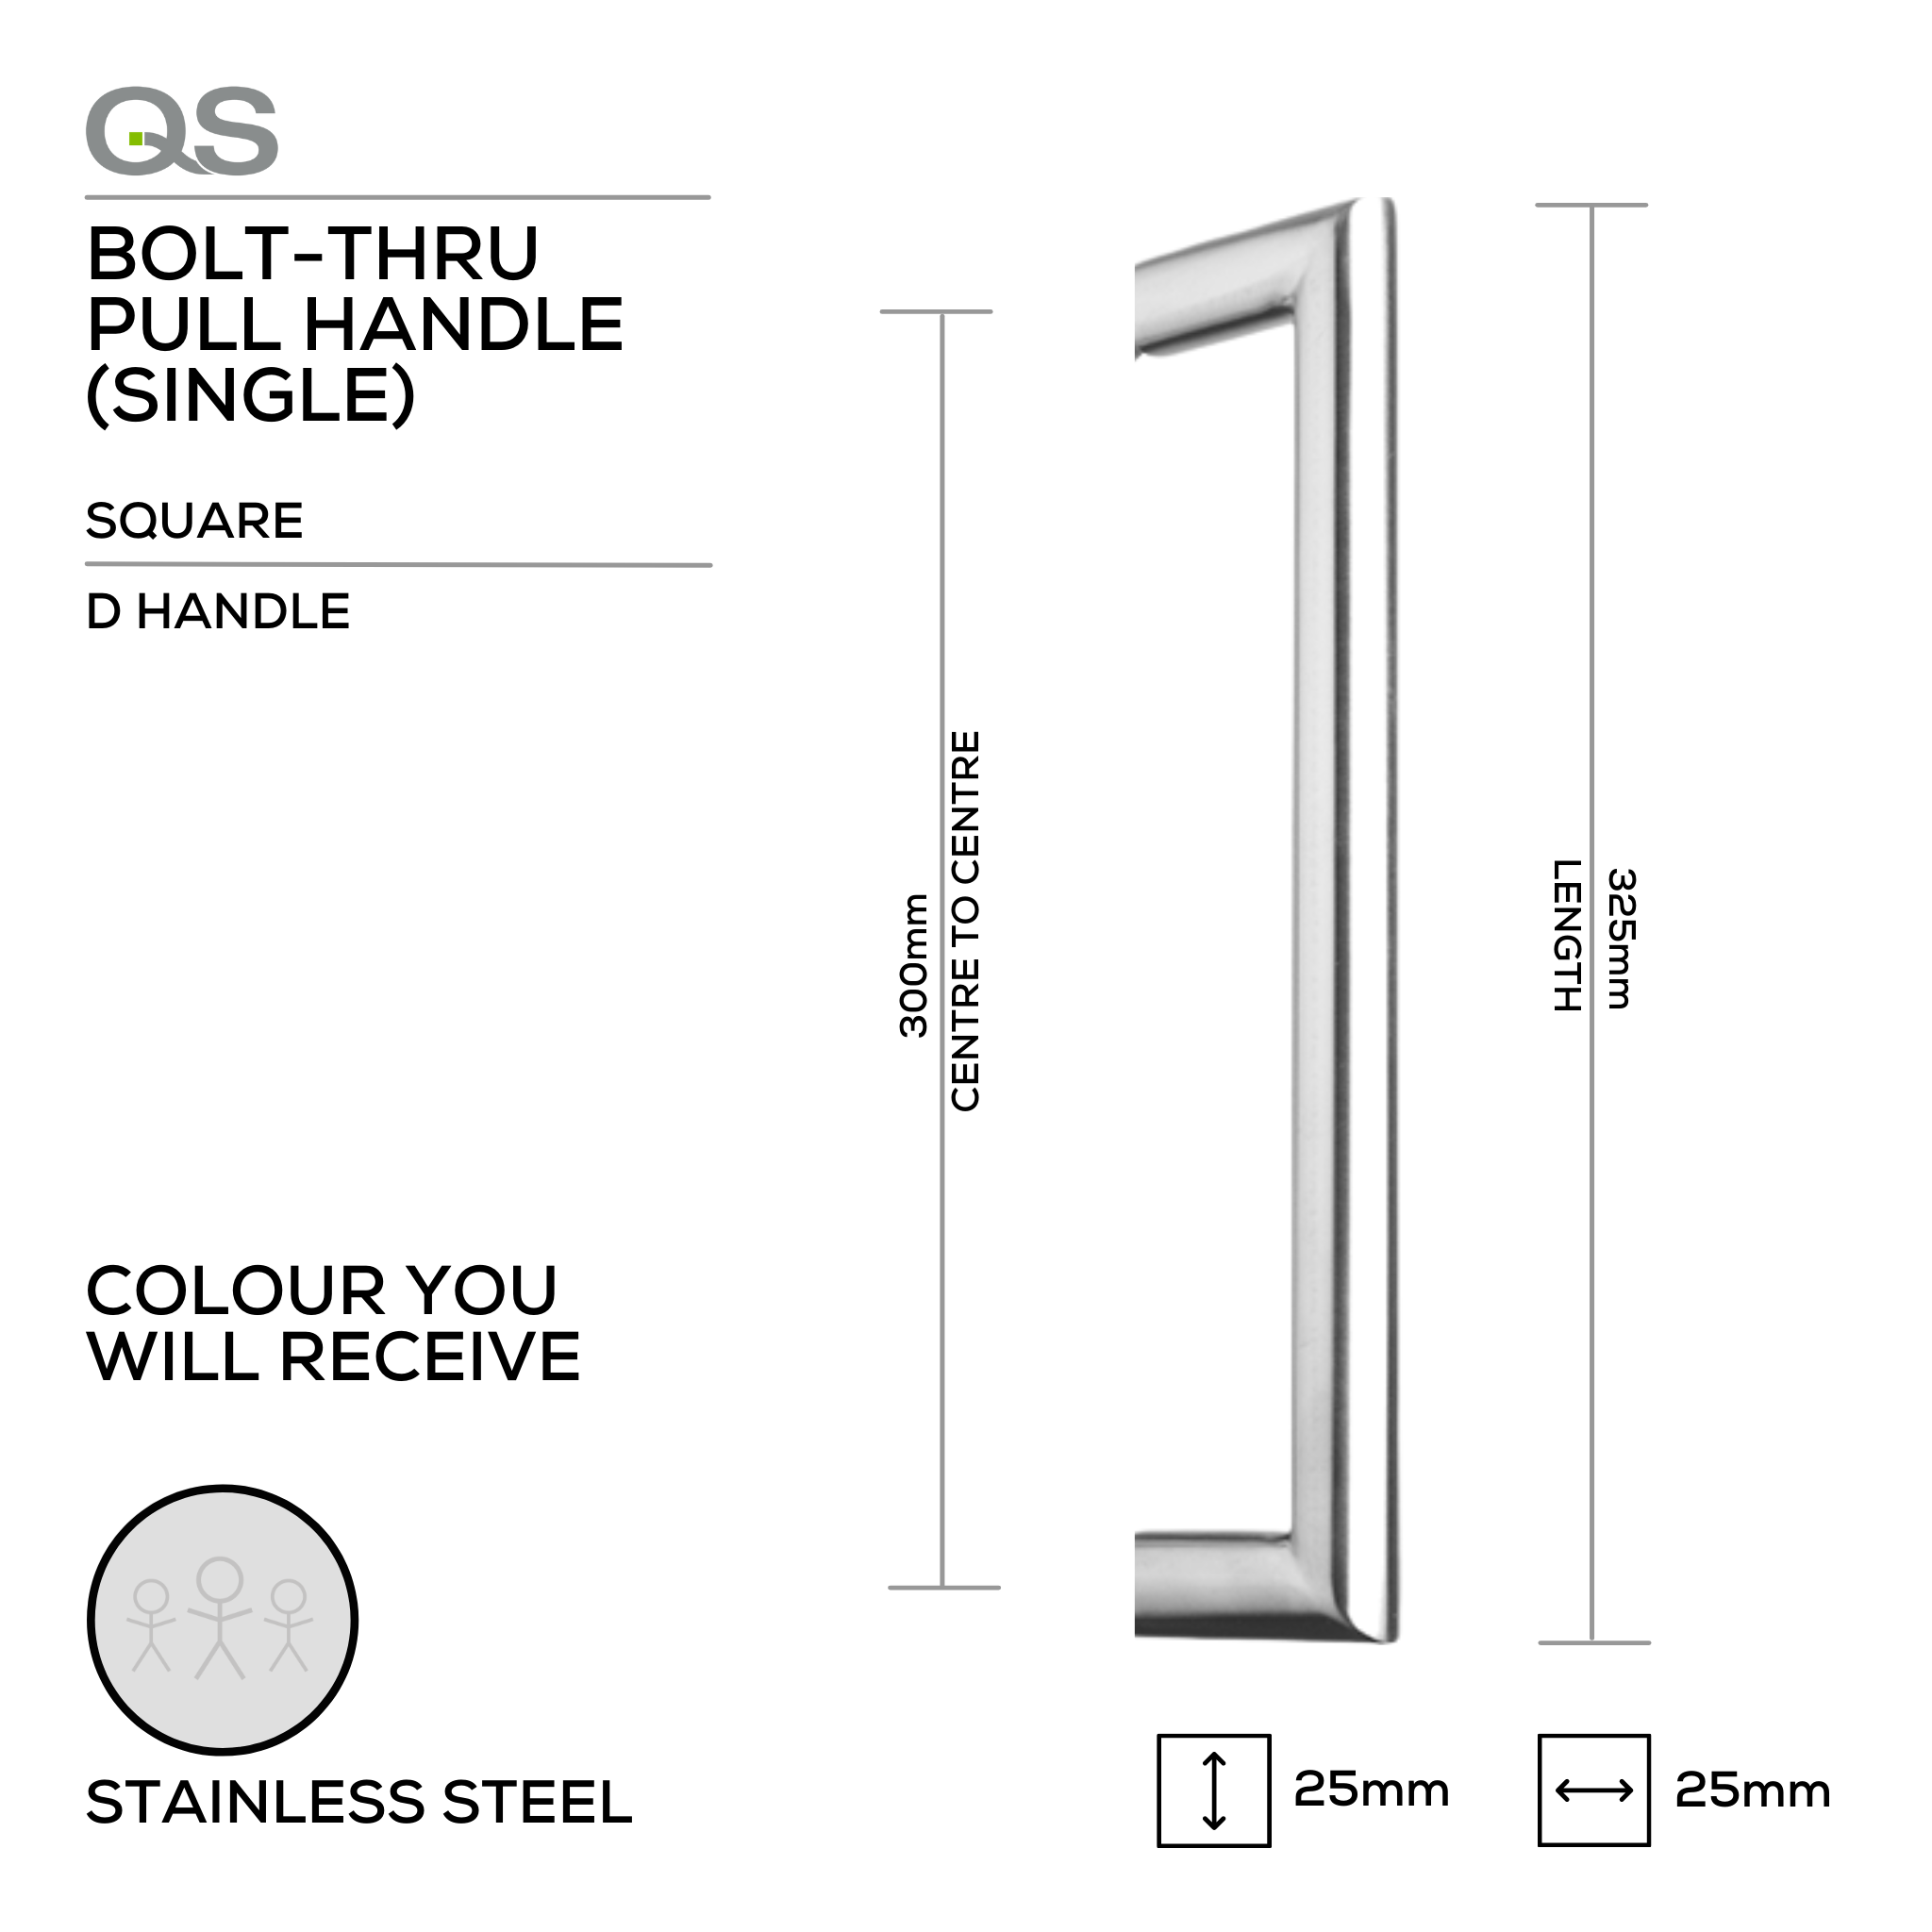 QS2602/1 Square D, Pull Handle, Square, D Handle, BoltThru, 25mm (Ø) x 325mm (l) x 300mm (ctc), Stainless Steel, QS